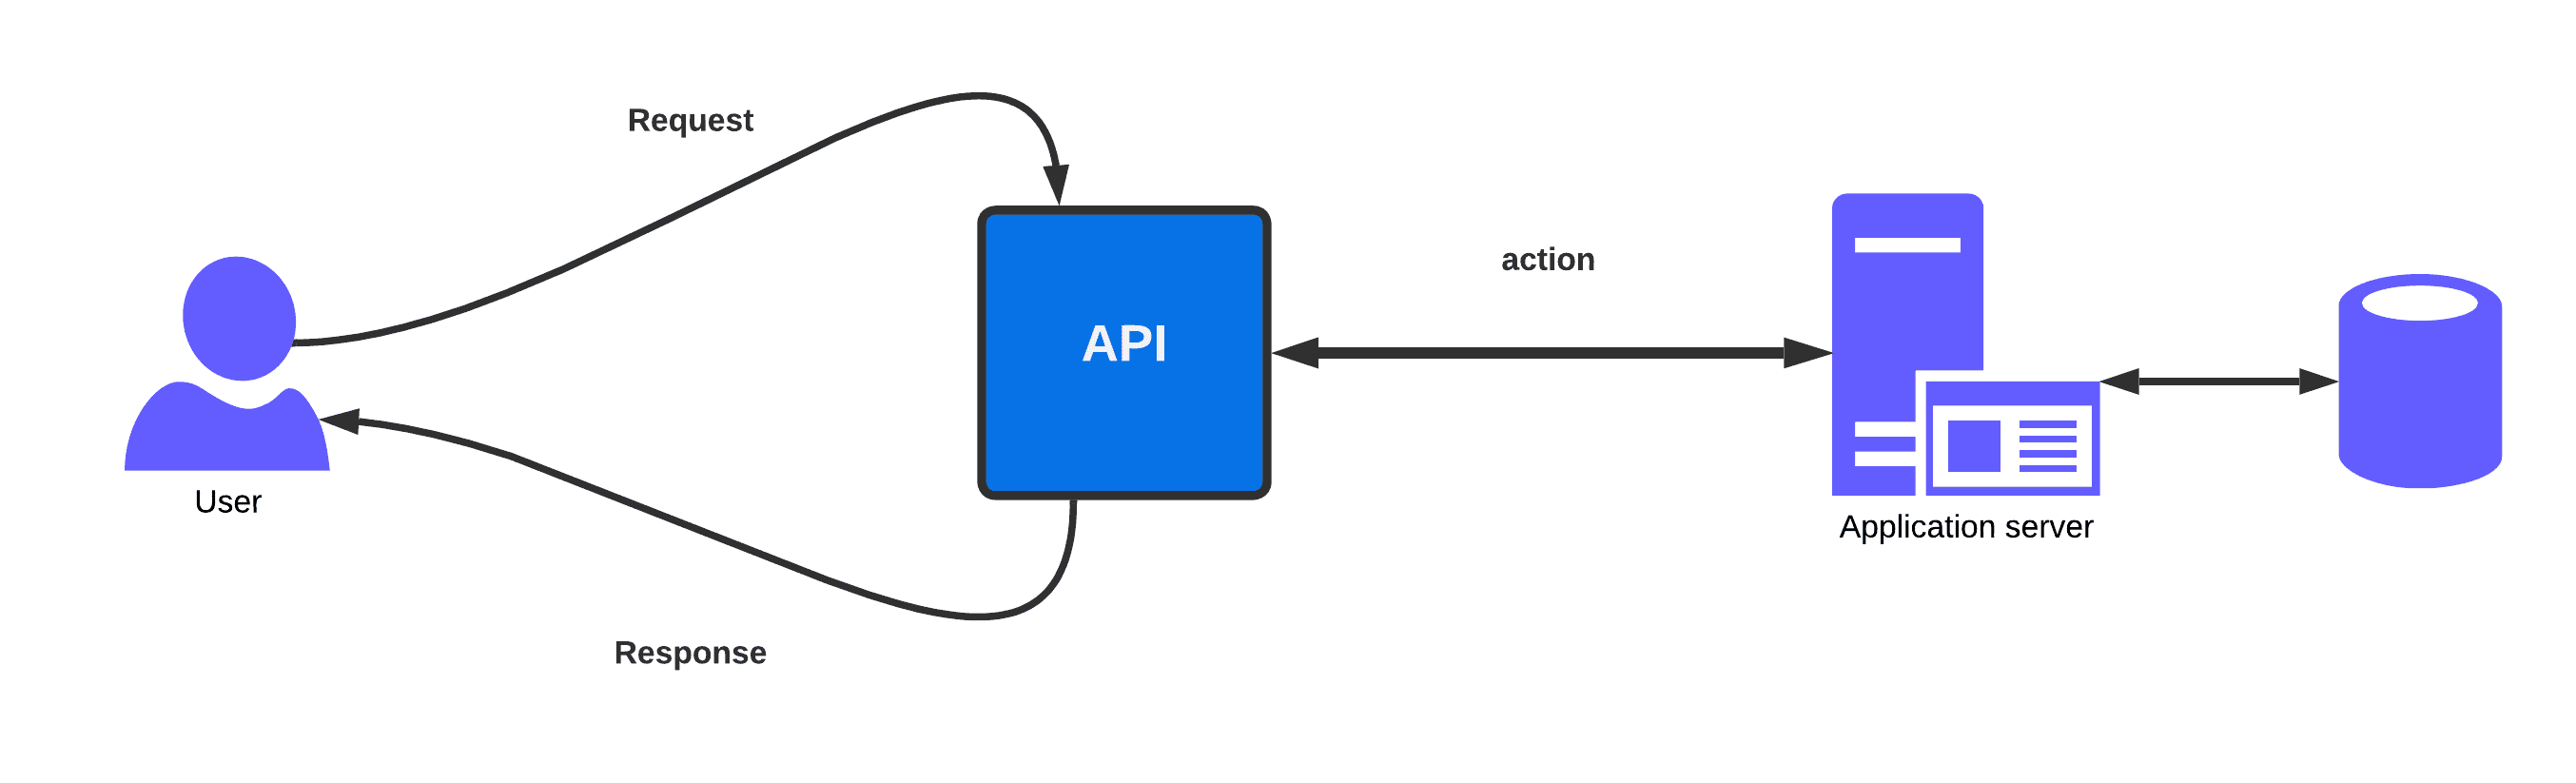 How to design good APIs?